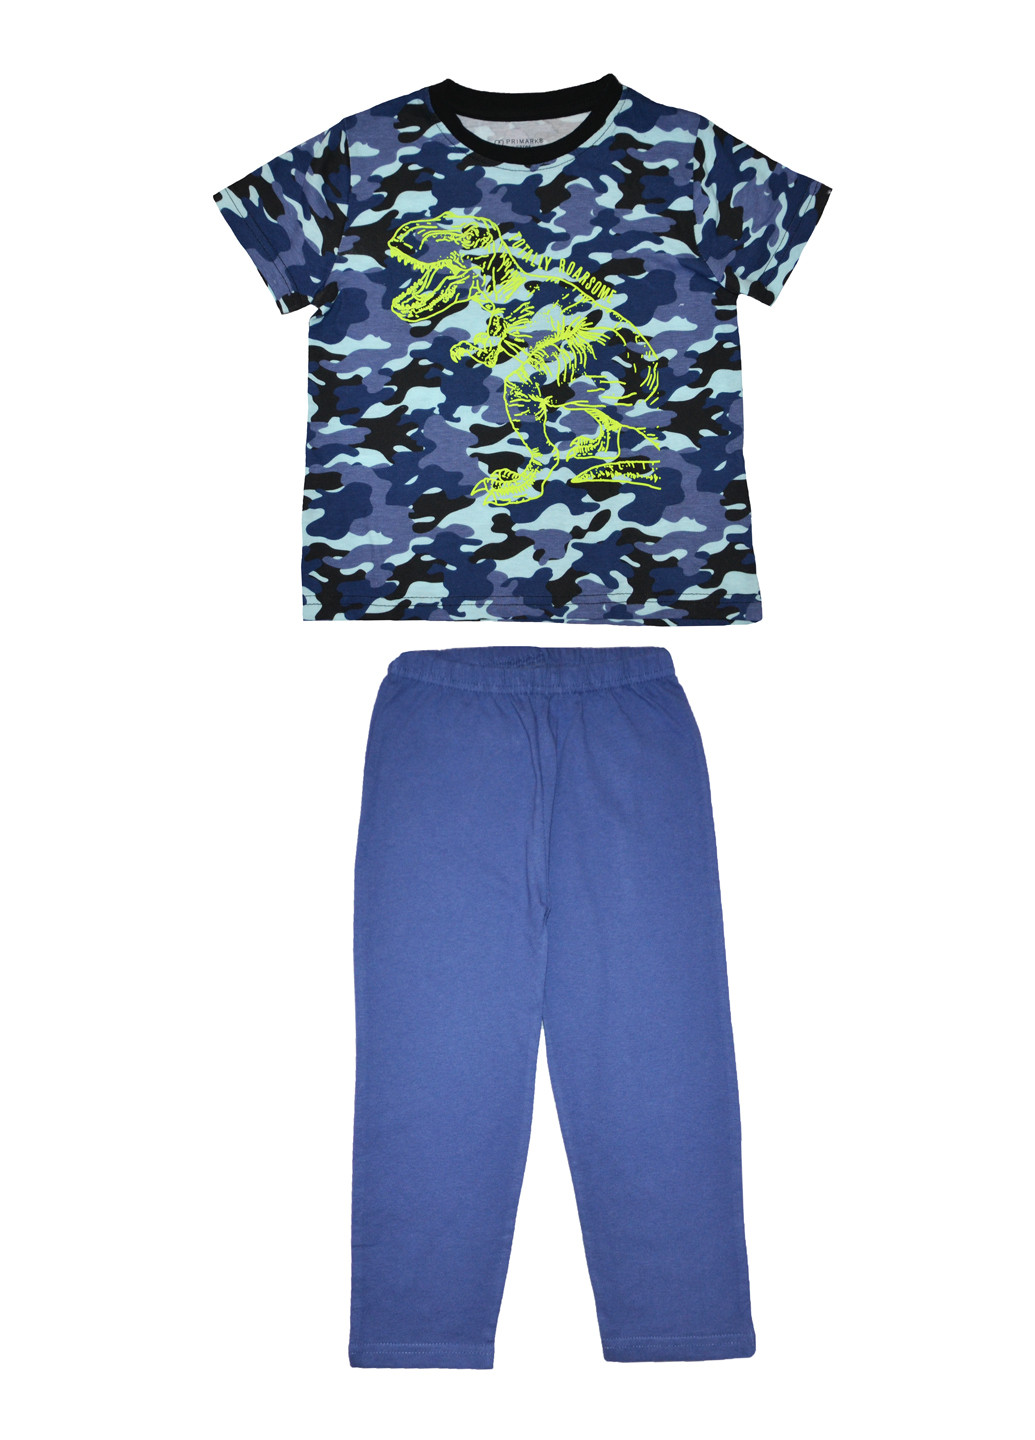 Синяя всесезон пижама (футболка, штаны) футболка + брюки Primark